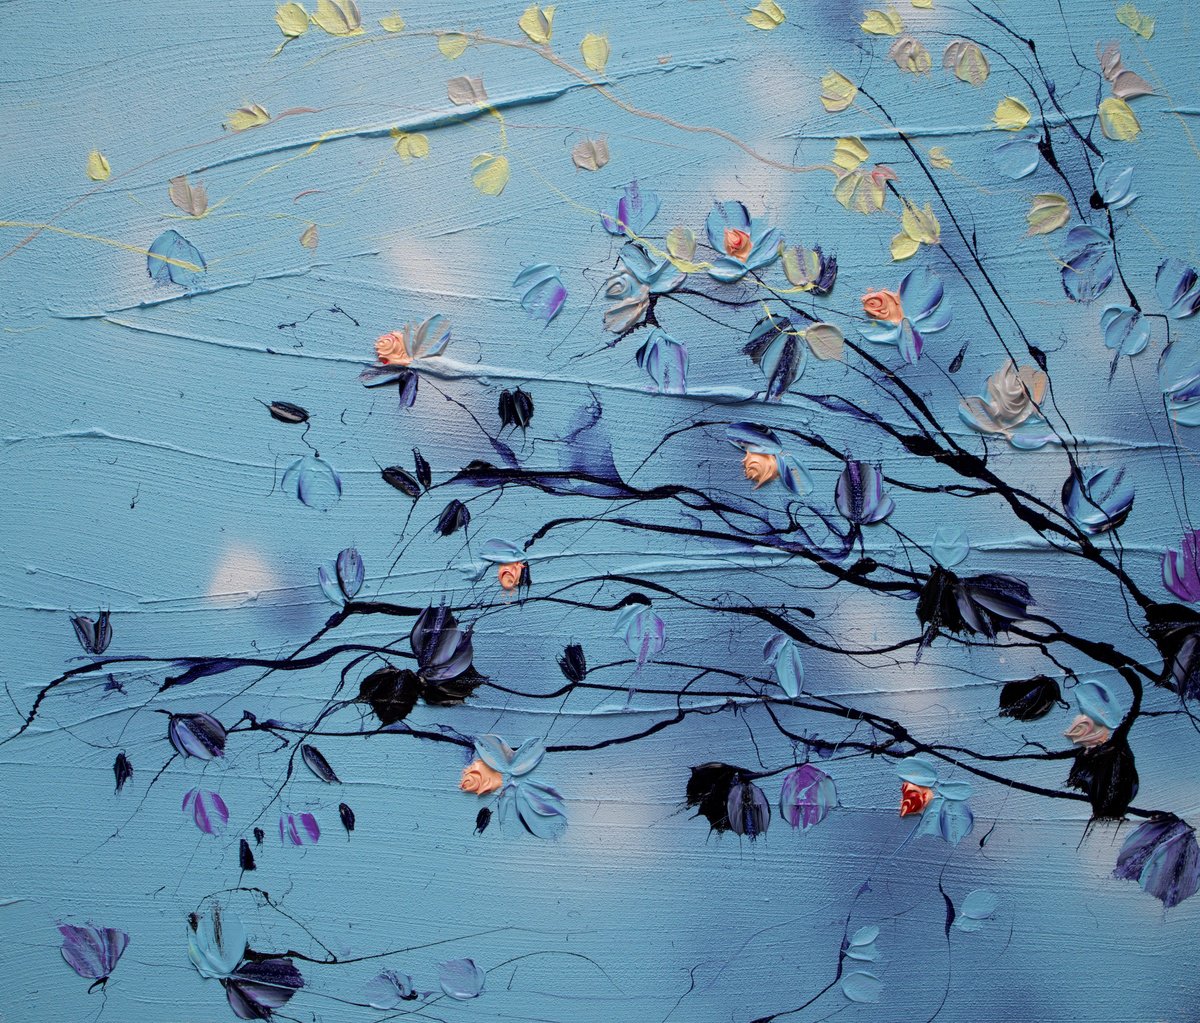 Acrylic floral painting ,,Flowing Air" by Anastassia Skopp